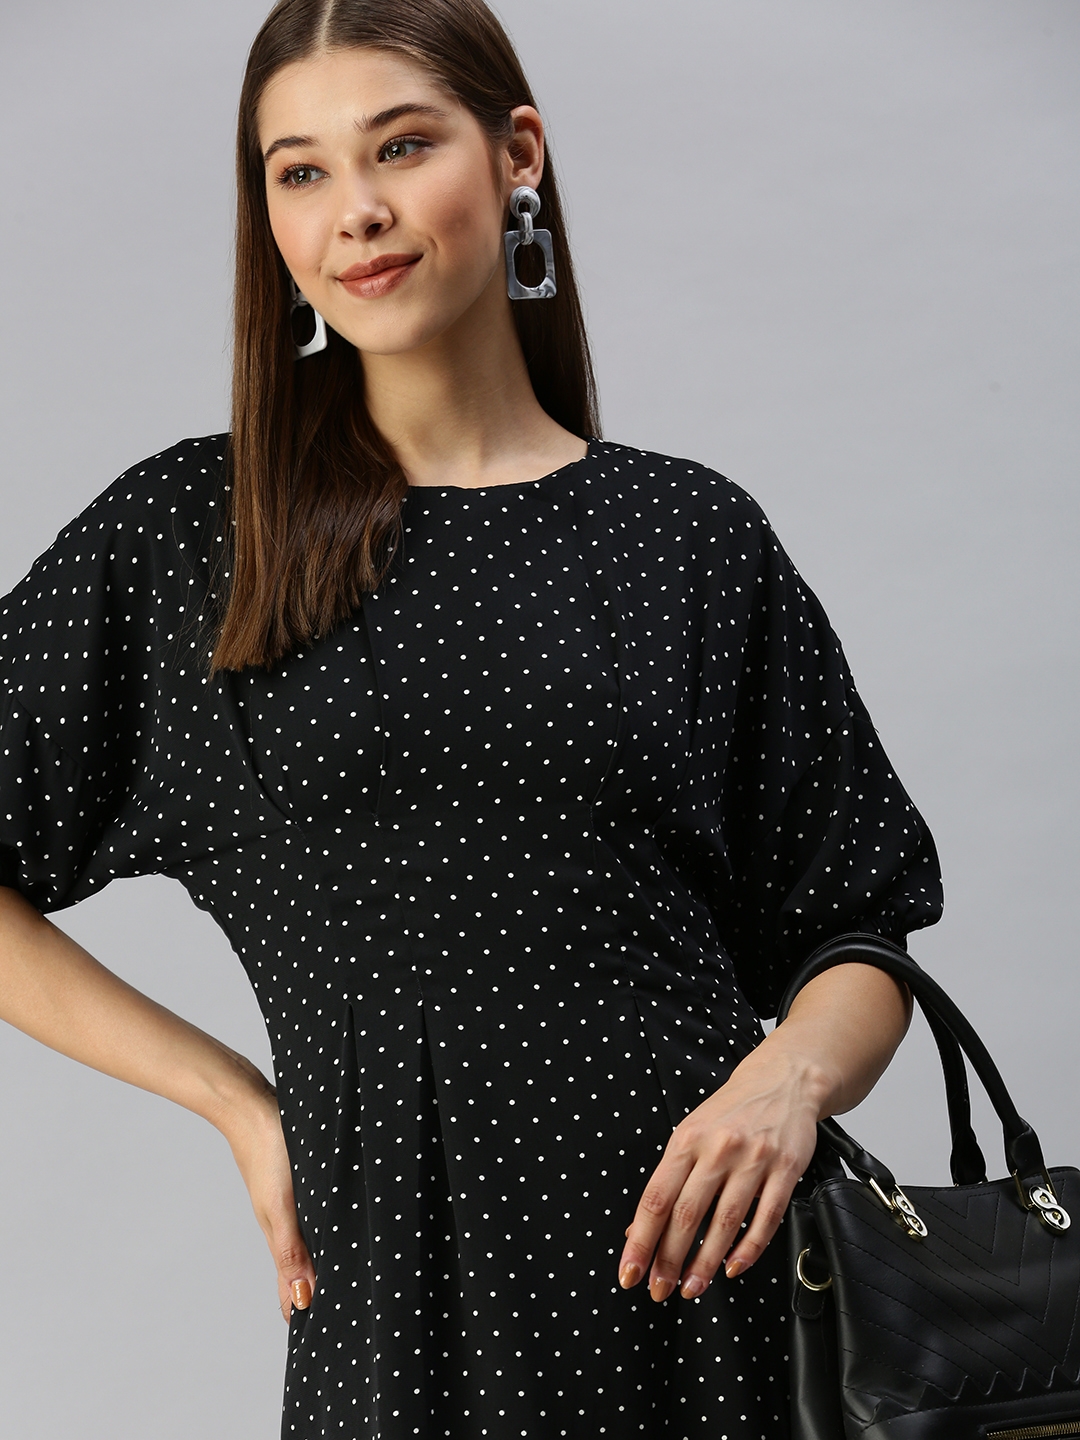 Women's Black Polyester Printed Dresses